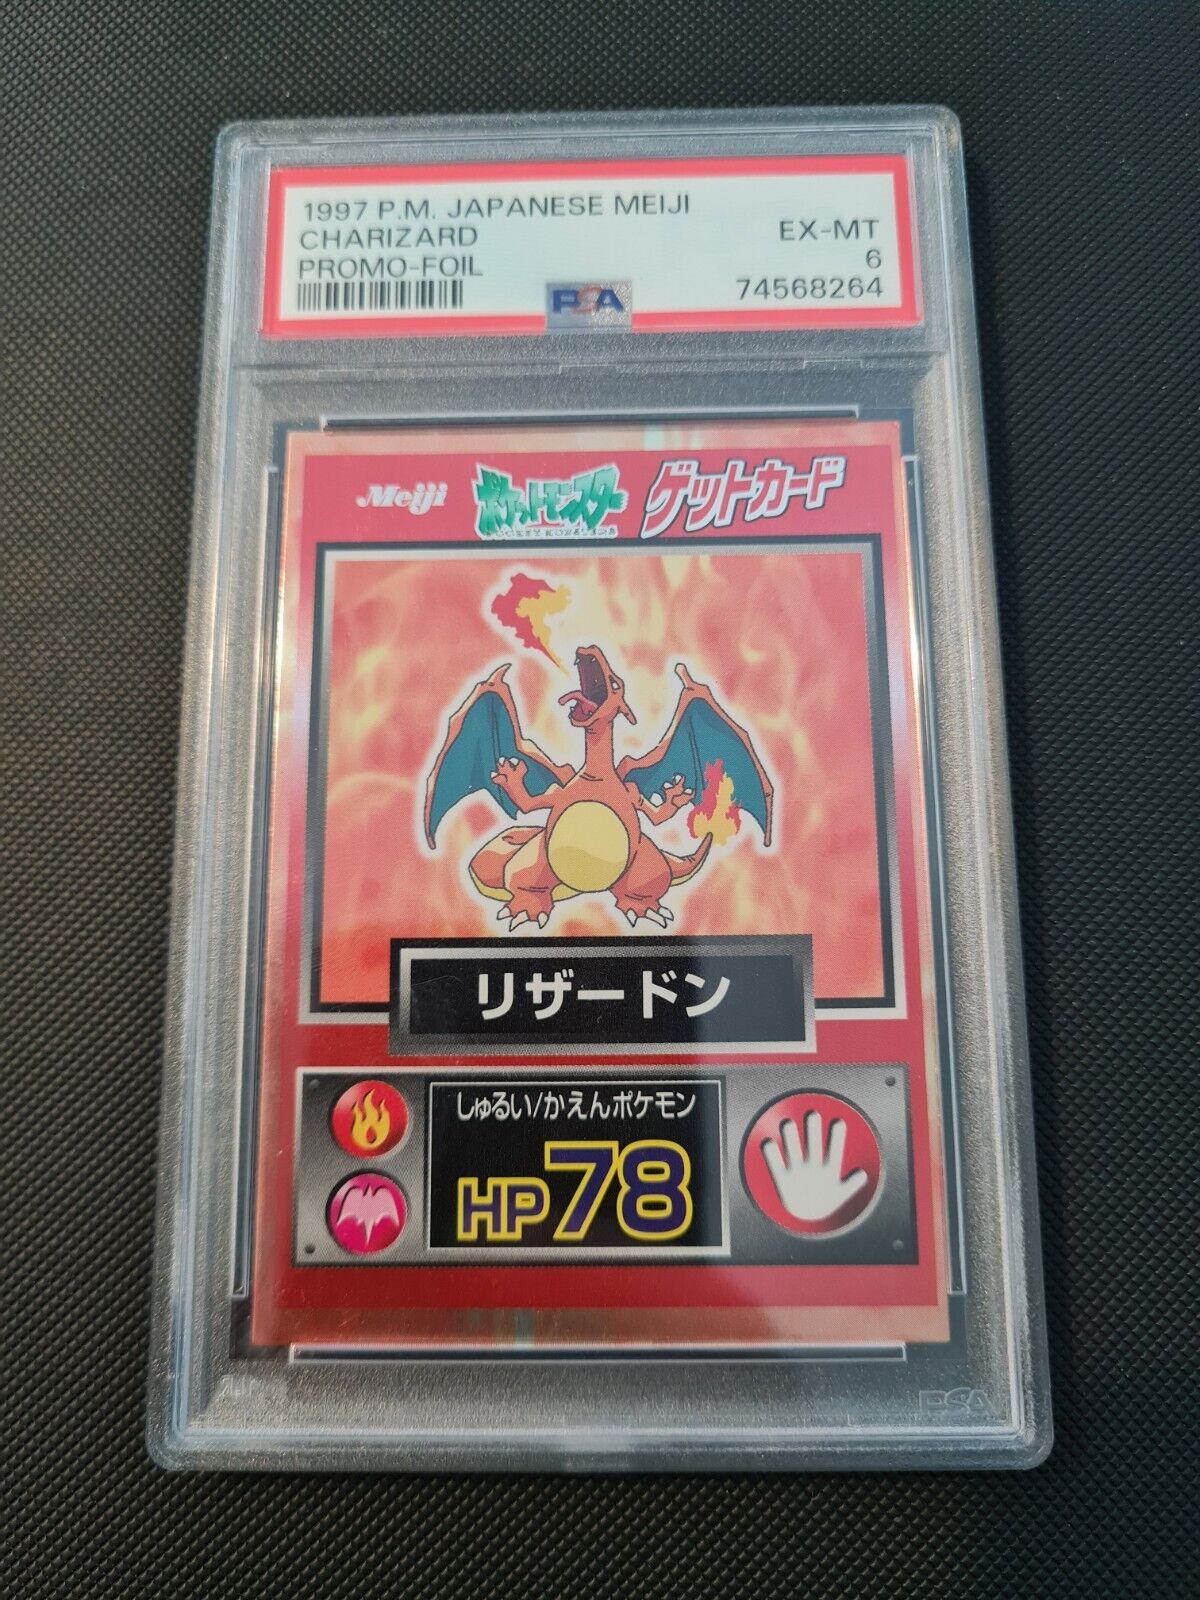 Pokemon Card - Japanese Charizard Meiji Promo Holo Rare Vintage 1997 - PSA 6